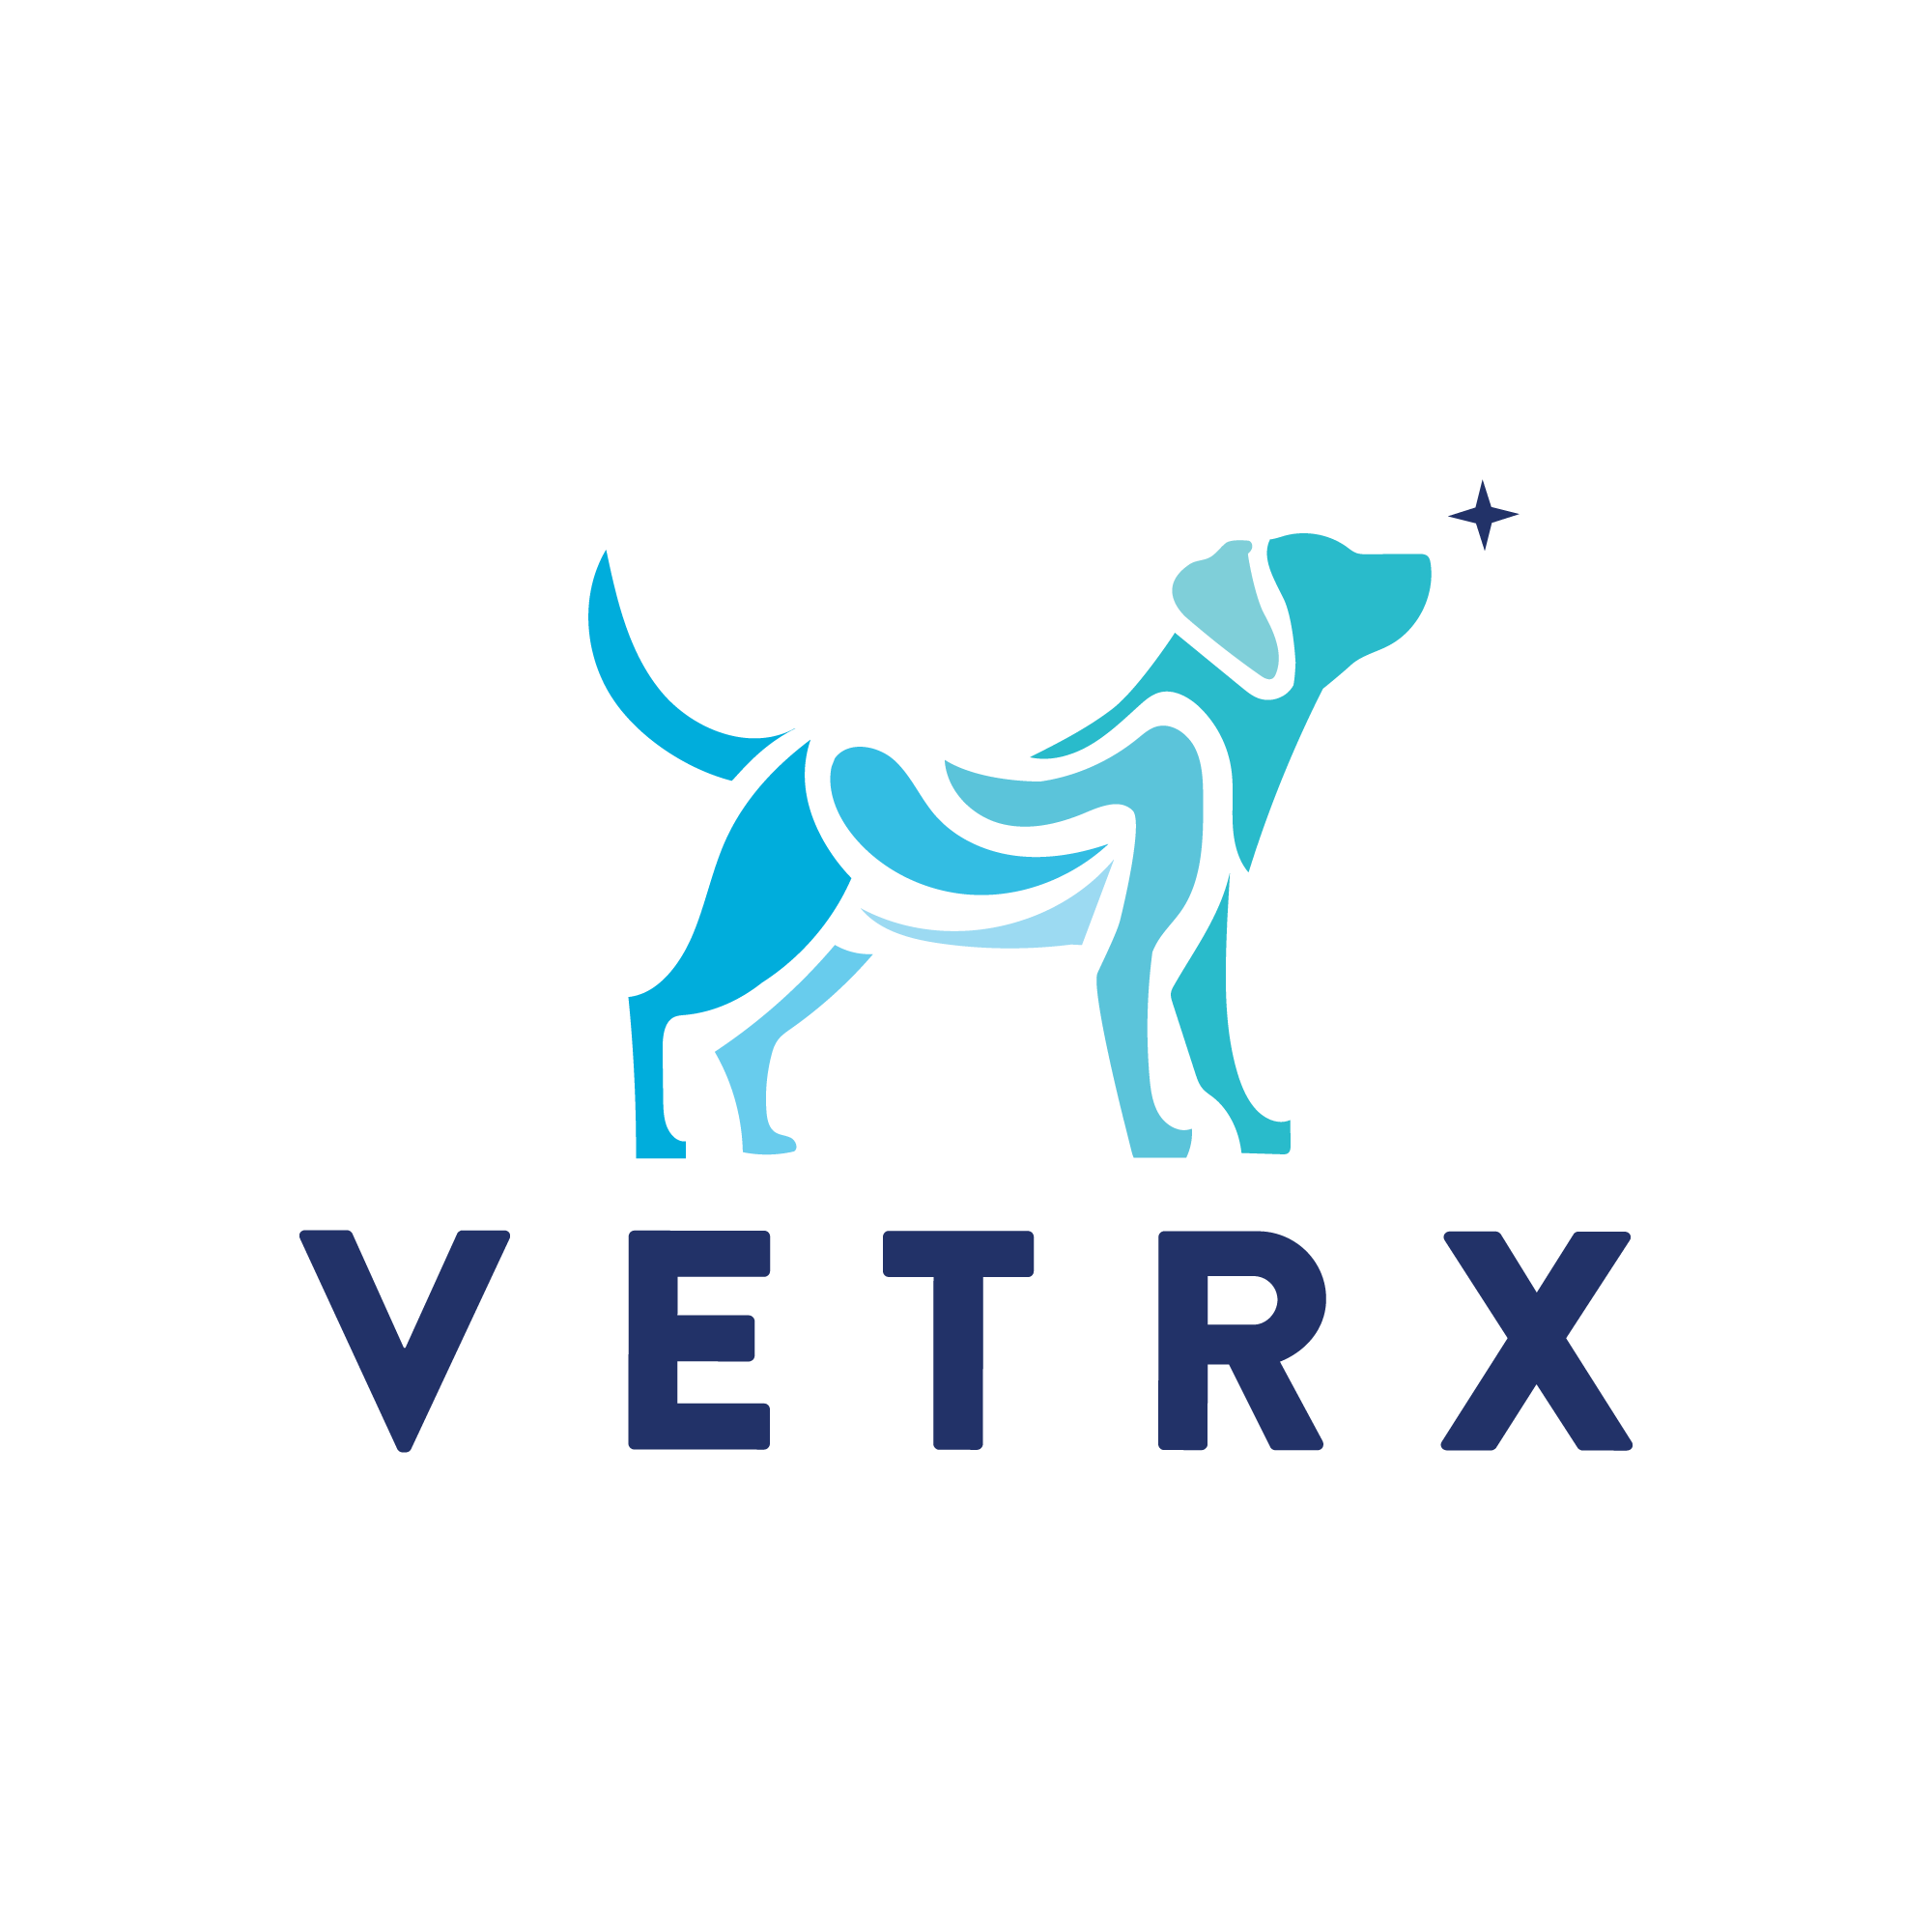 Vetrx logo